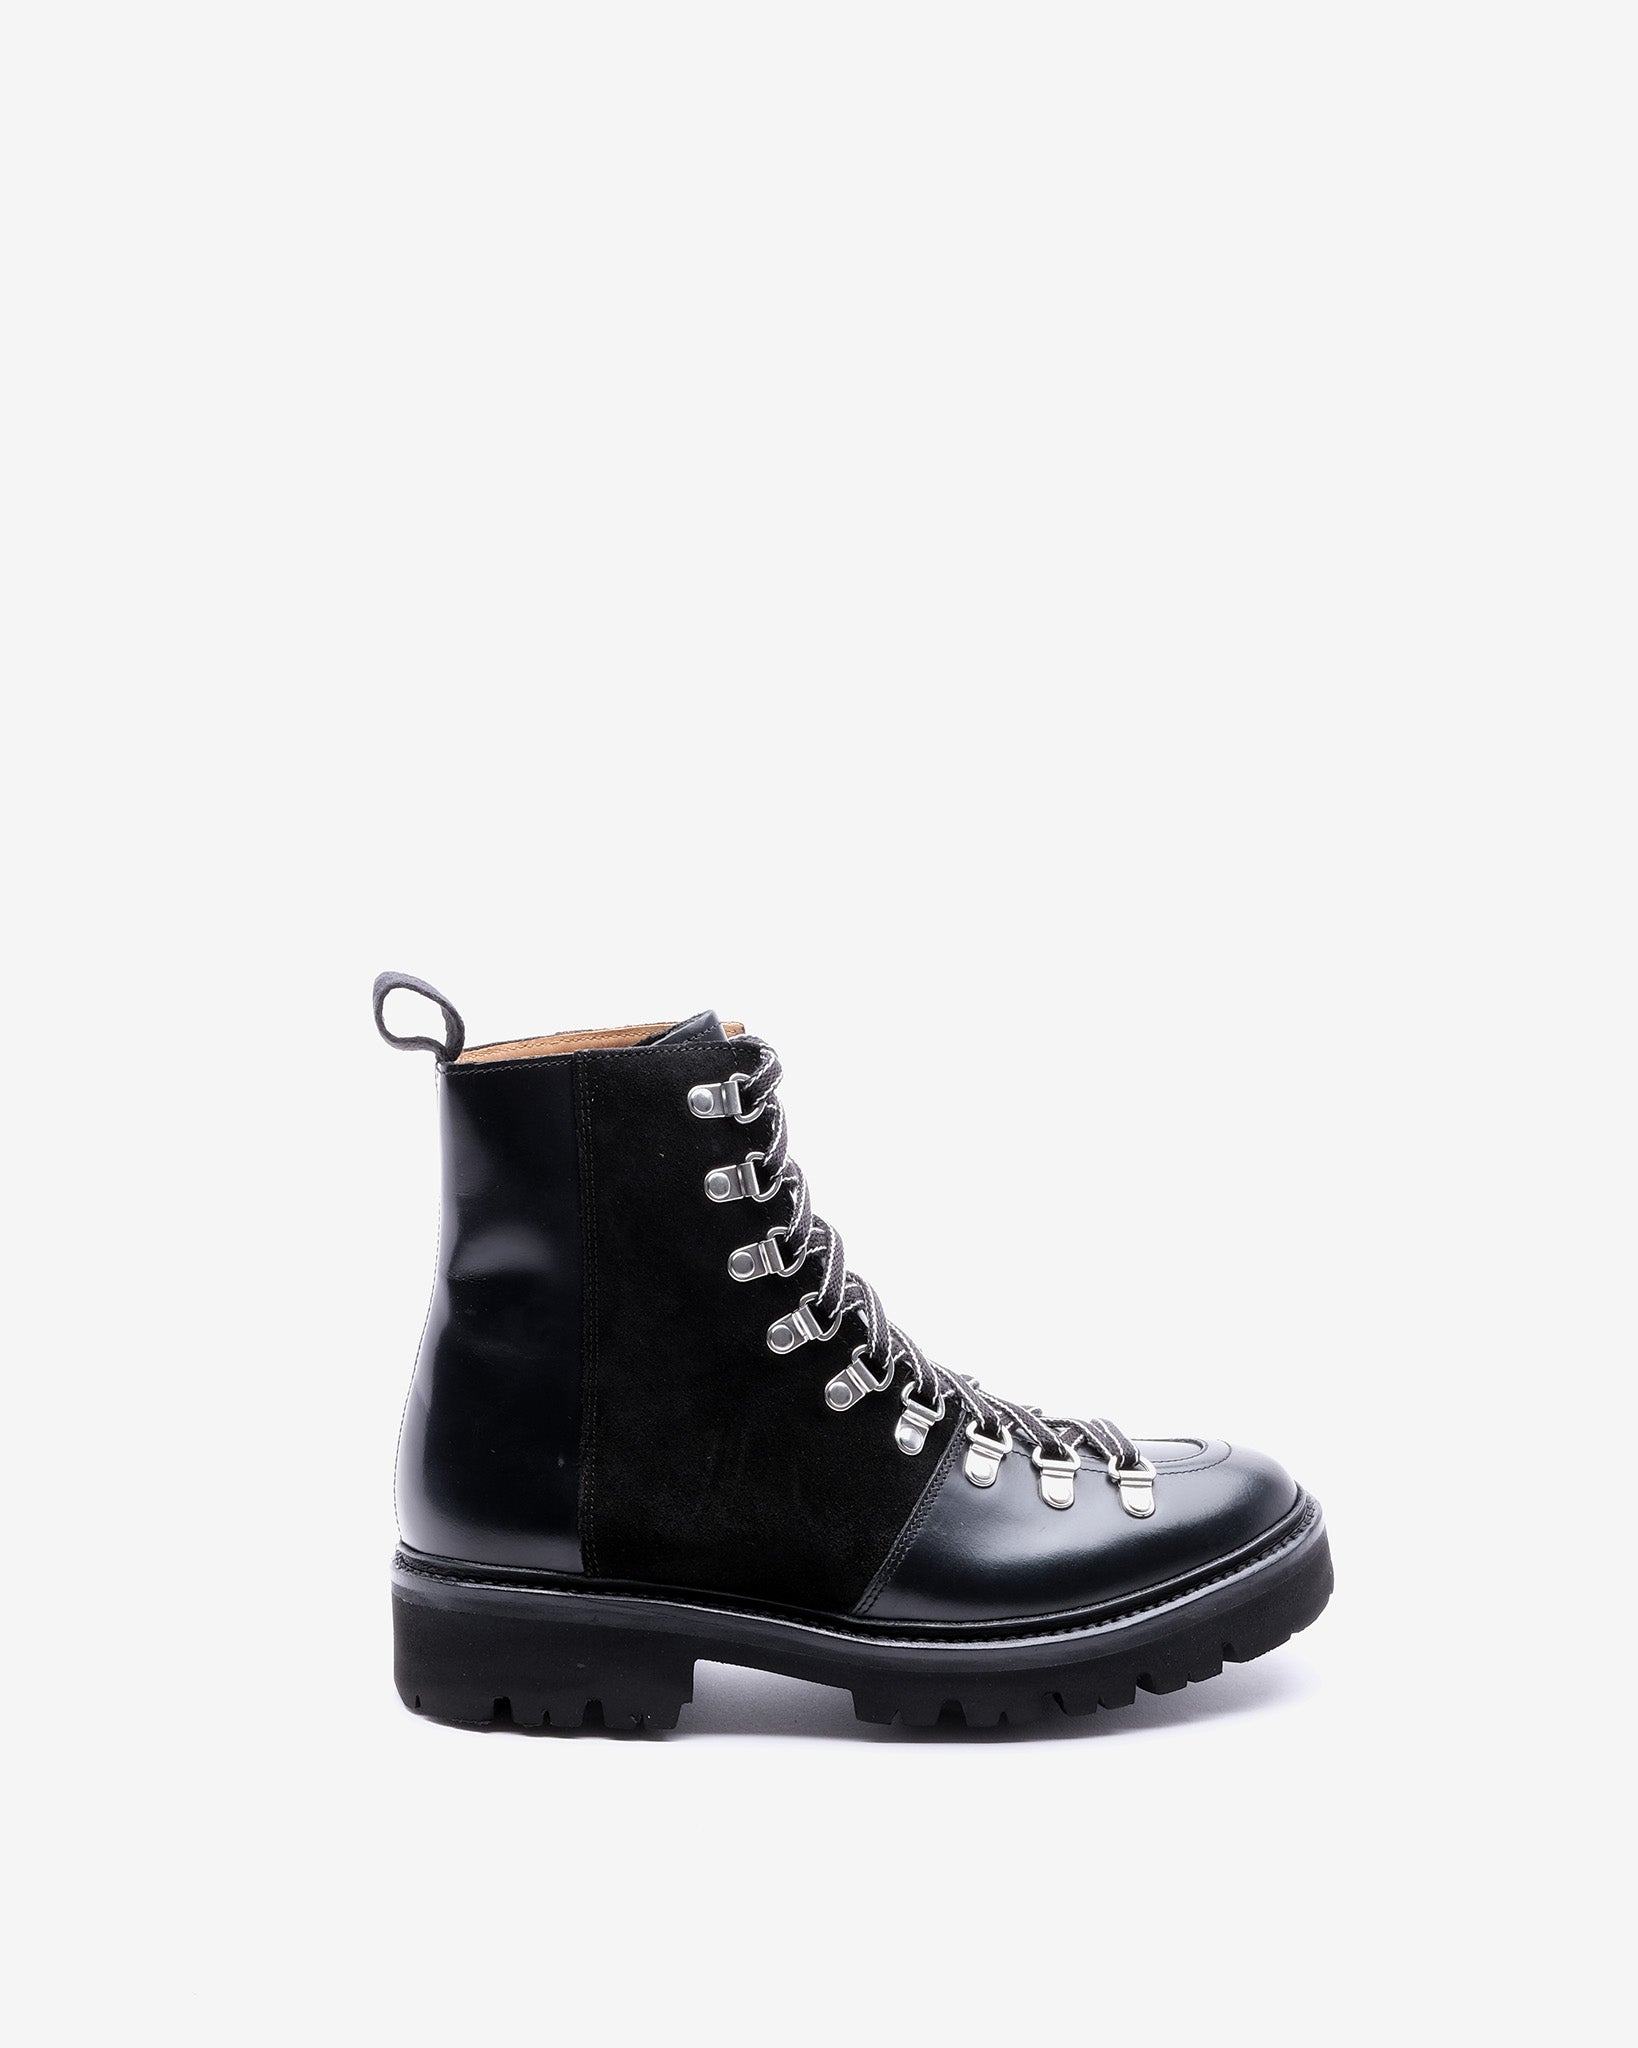 Nanette Black Colorado/Black Suede Leather Boots